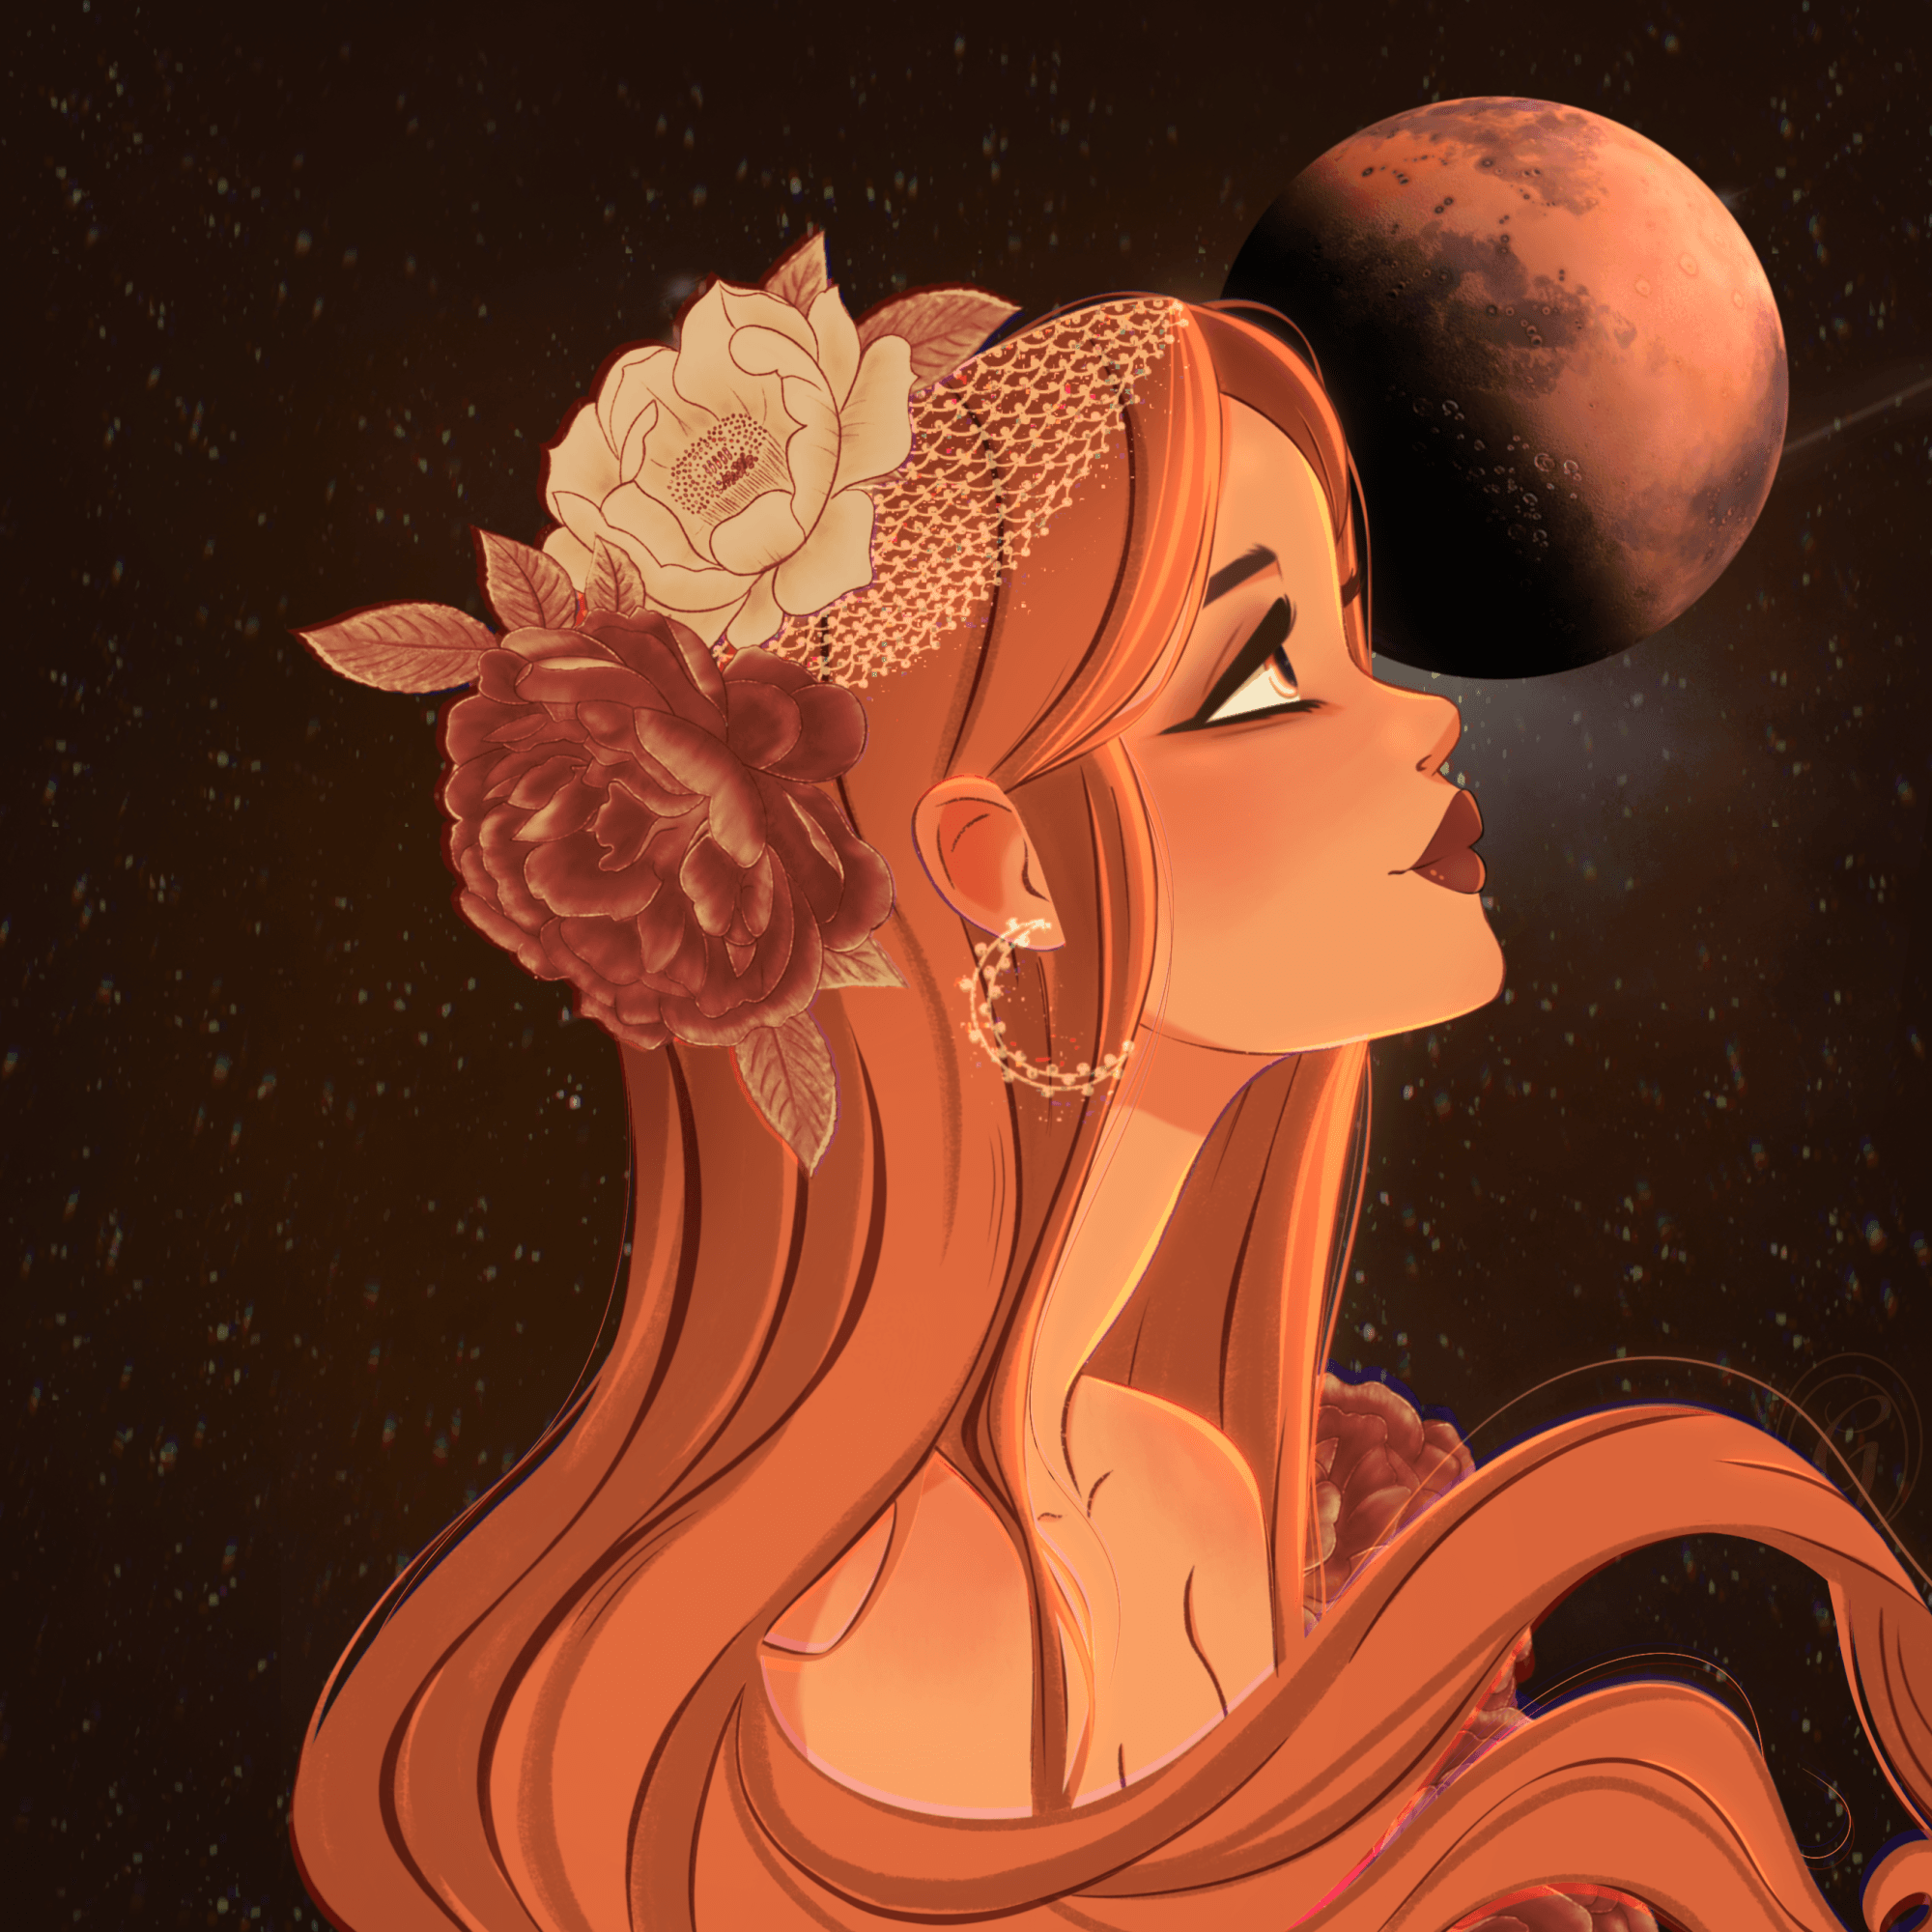 Solar System Woman #13